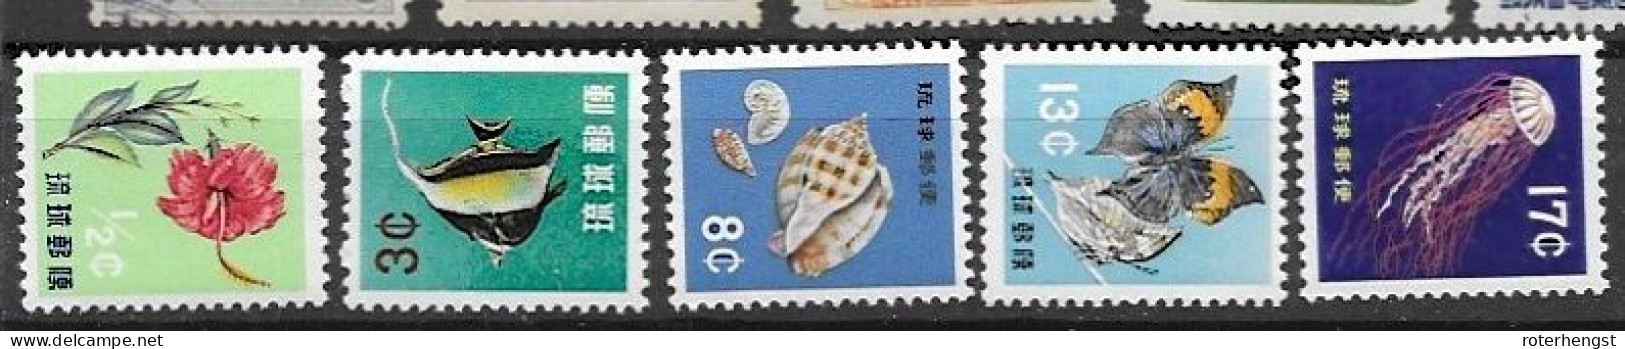 Ryu Kyu Mnh ** 42 Euros Good Set Jelly Fish Butterfly Shell Flower  1959 - Sonstige - Asien